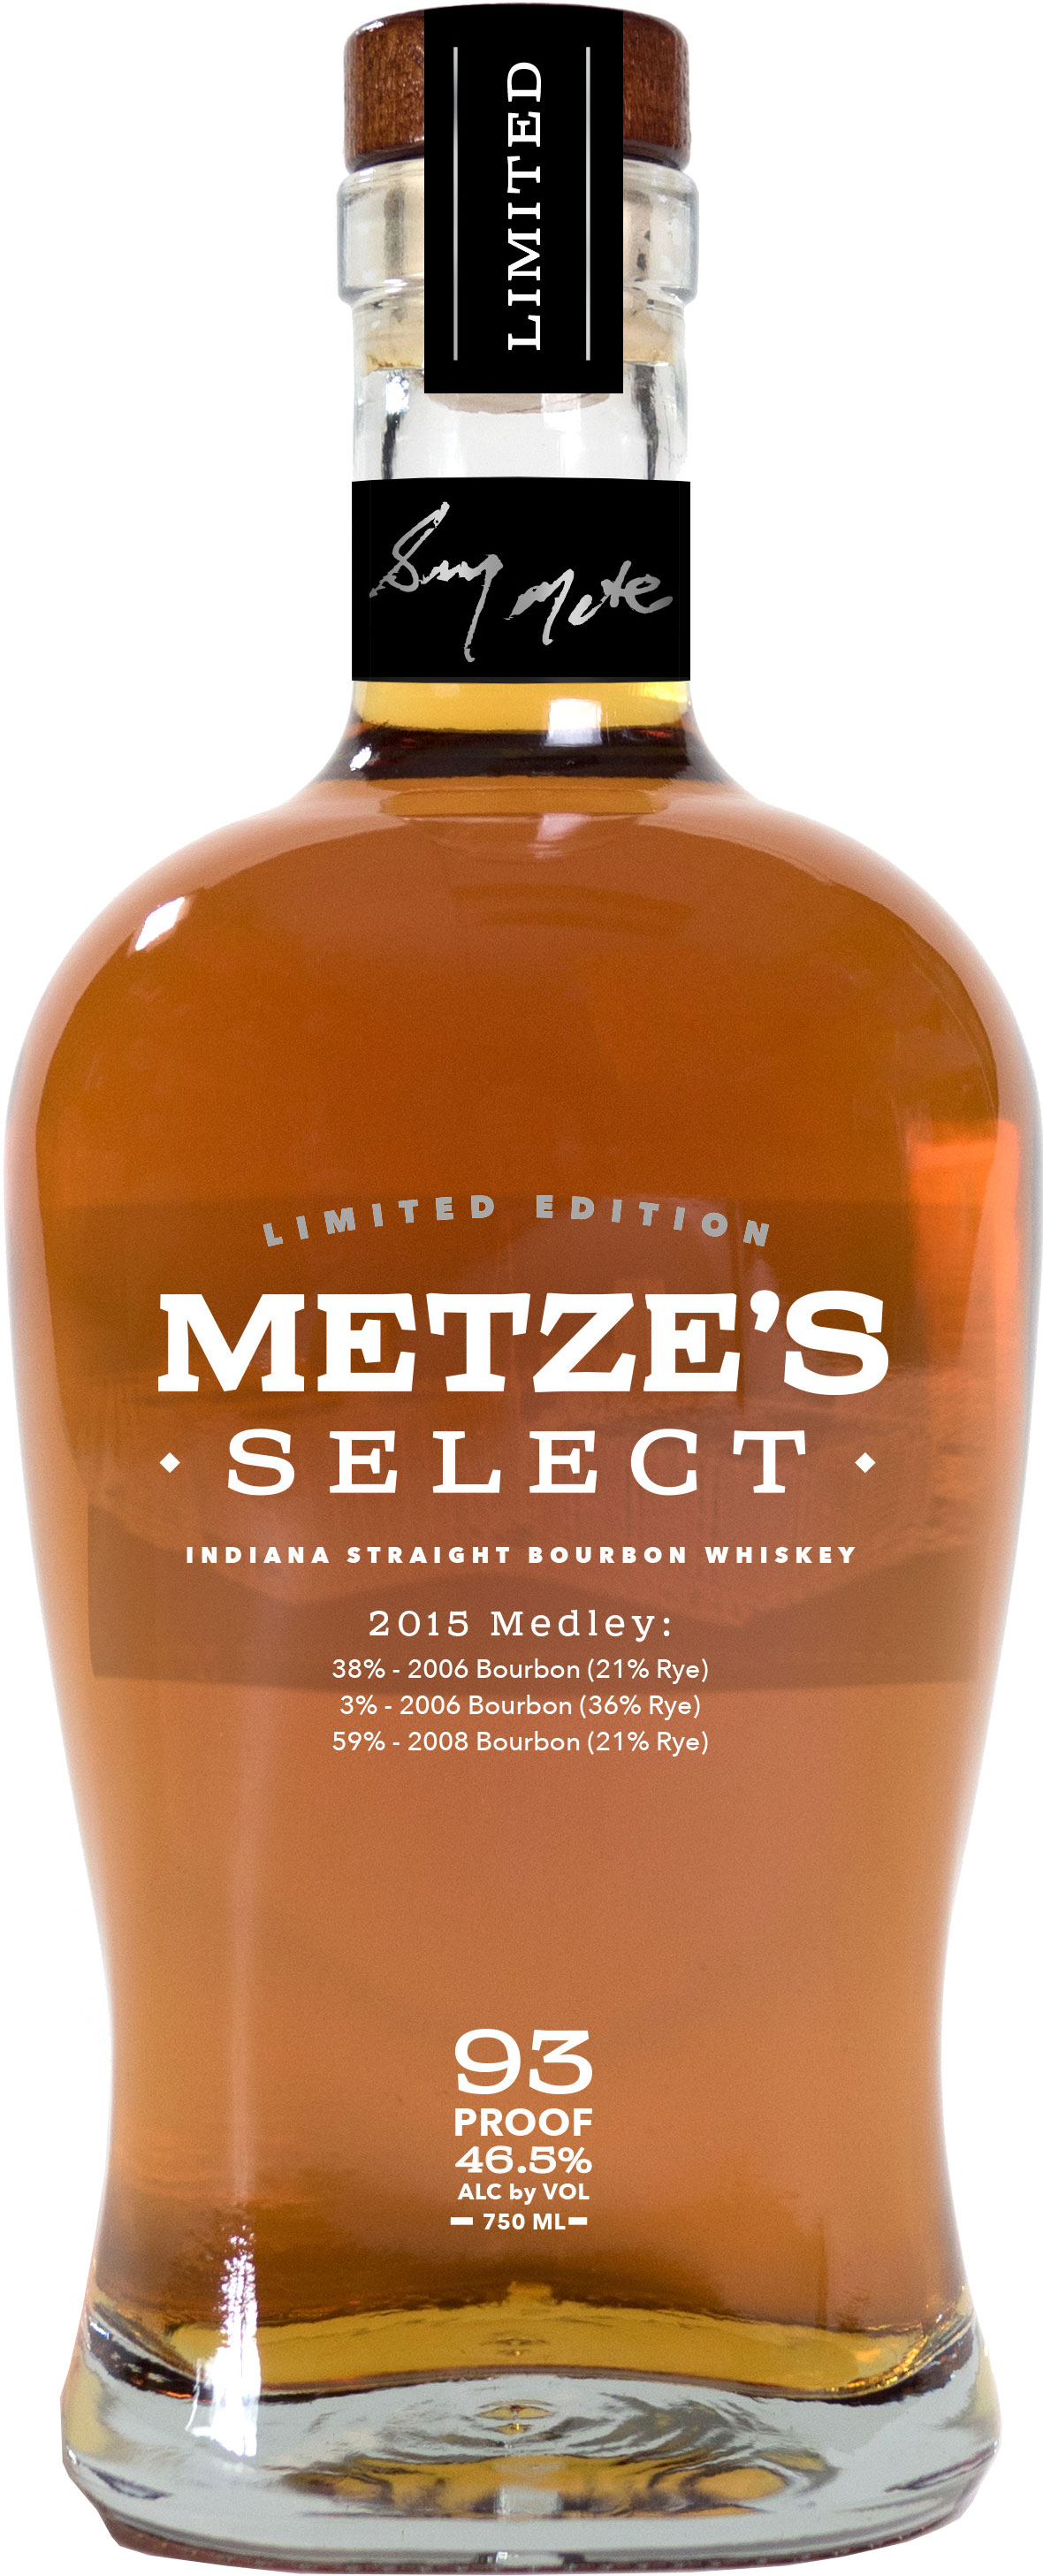 Metzes Select Indiana Straight Bourbon Whiskey 2015 Medley